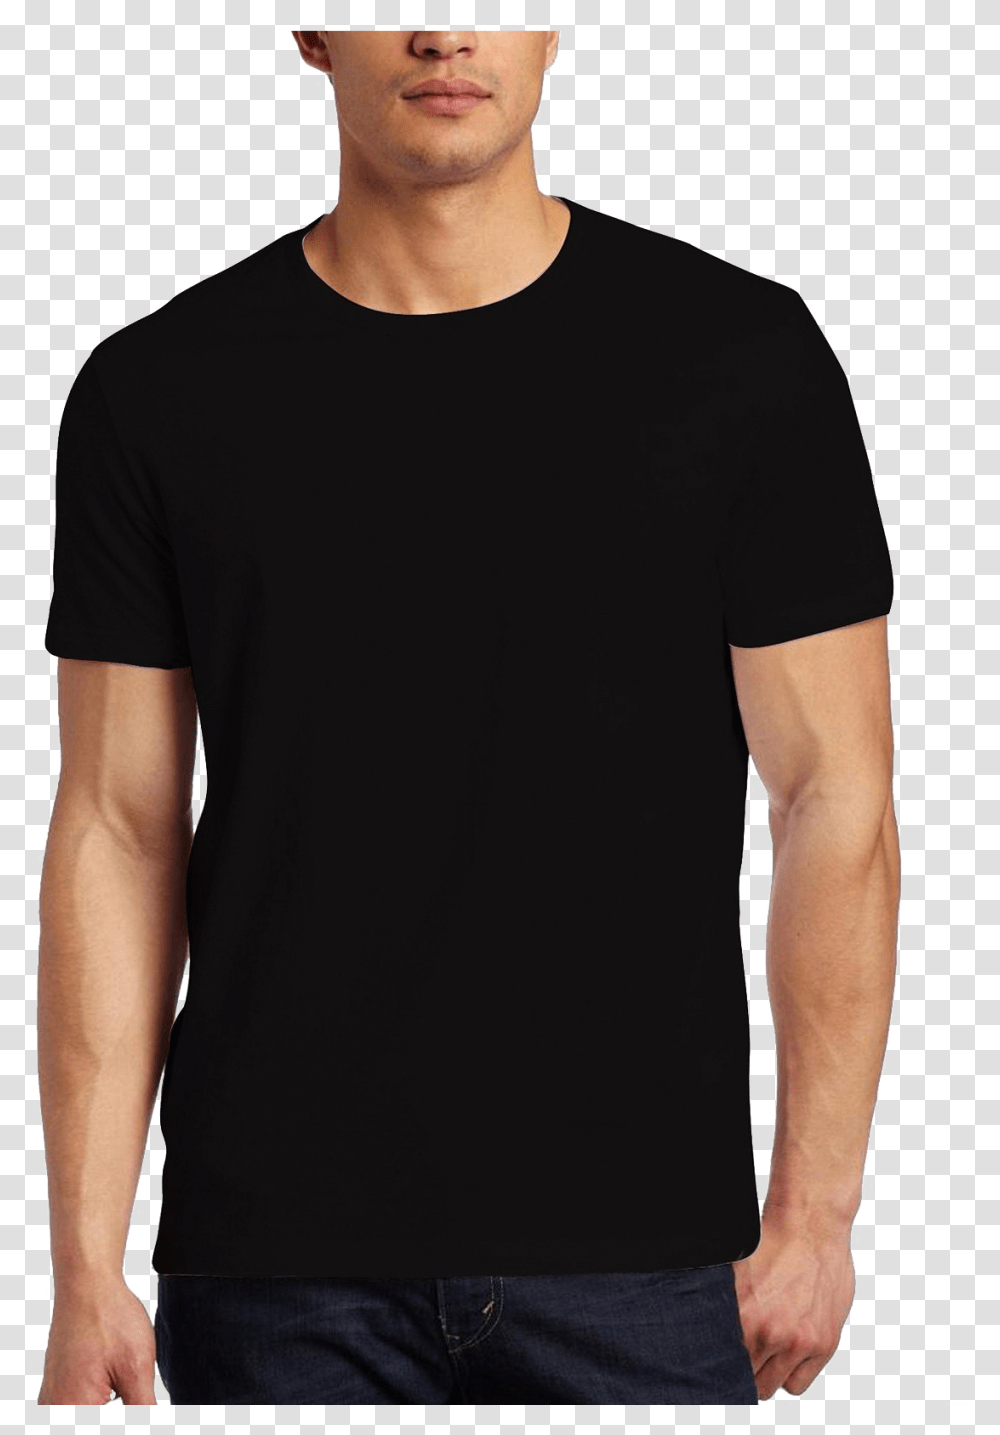 Black T Shirt Image Background Black T Shirt Background, Sleeve, Apparel, Long Sleeve Transparent Png